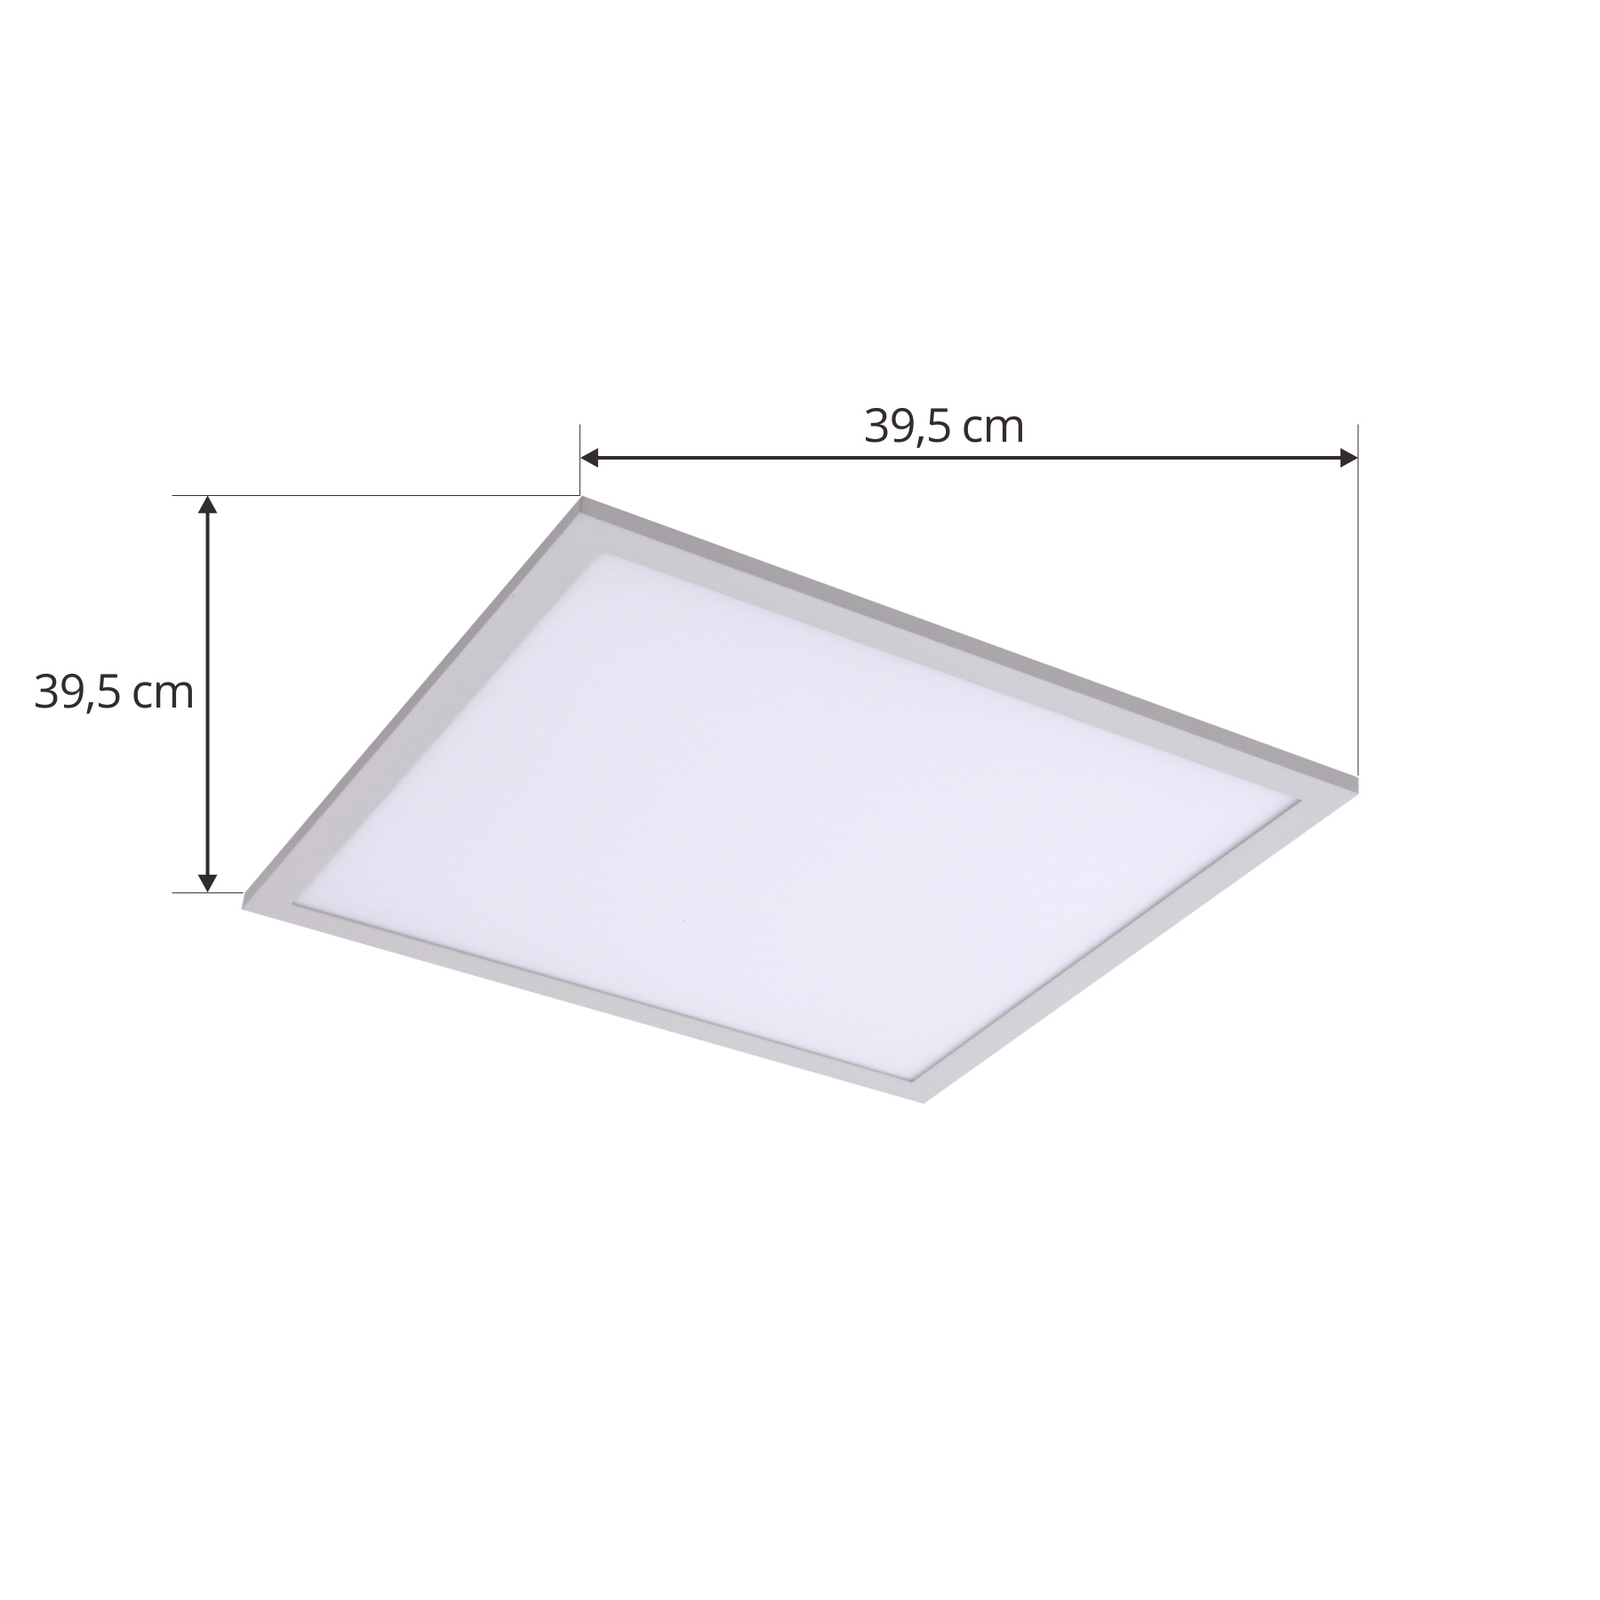 Pannello LED Lindby Enhife, bianco, 39,5 x 39,5 cm, alluminio